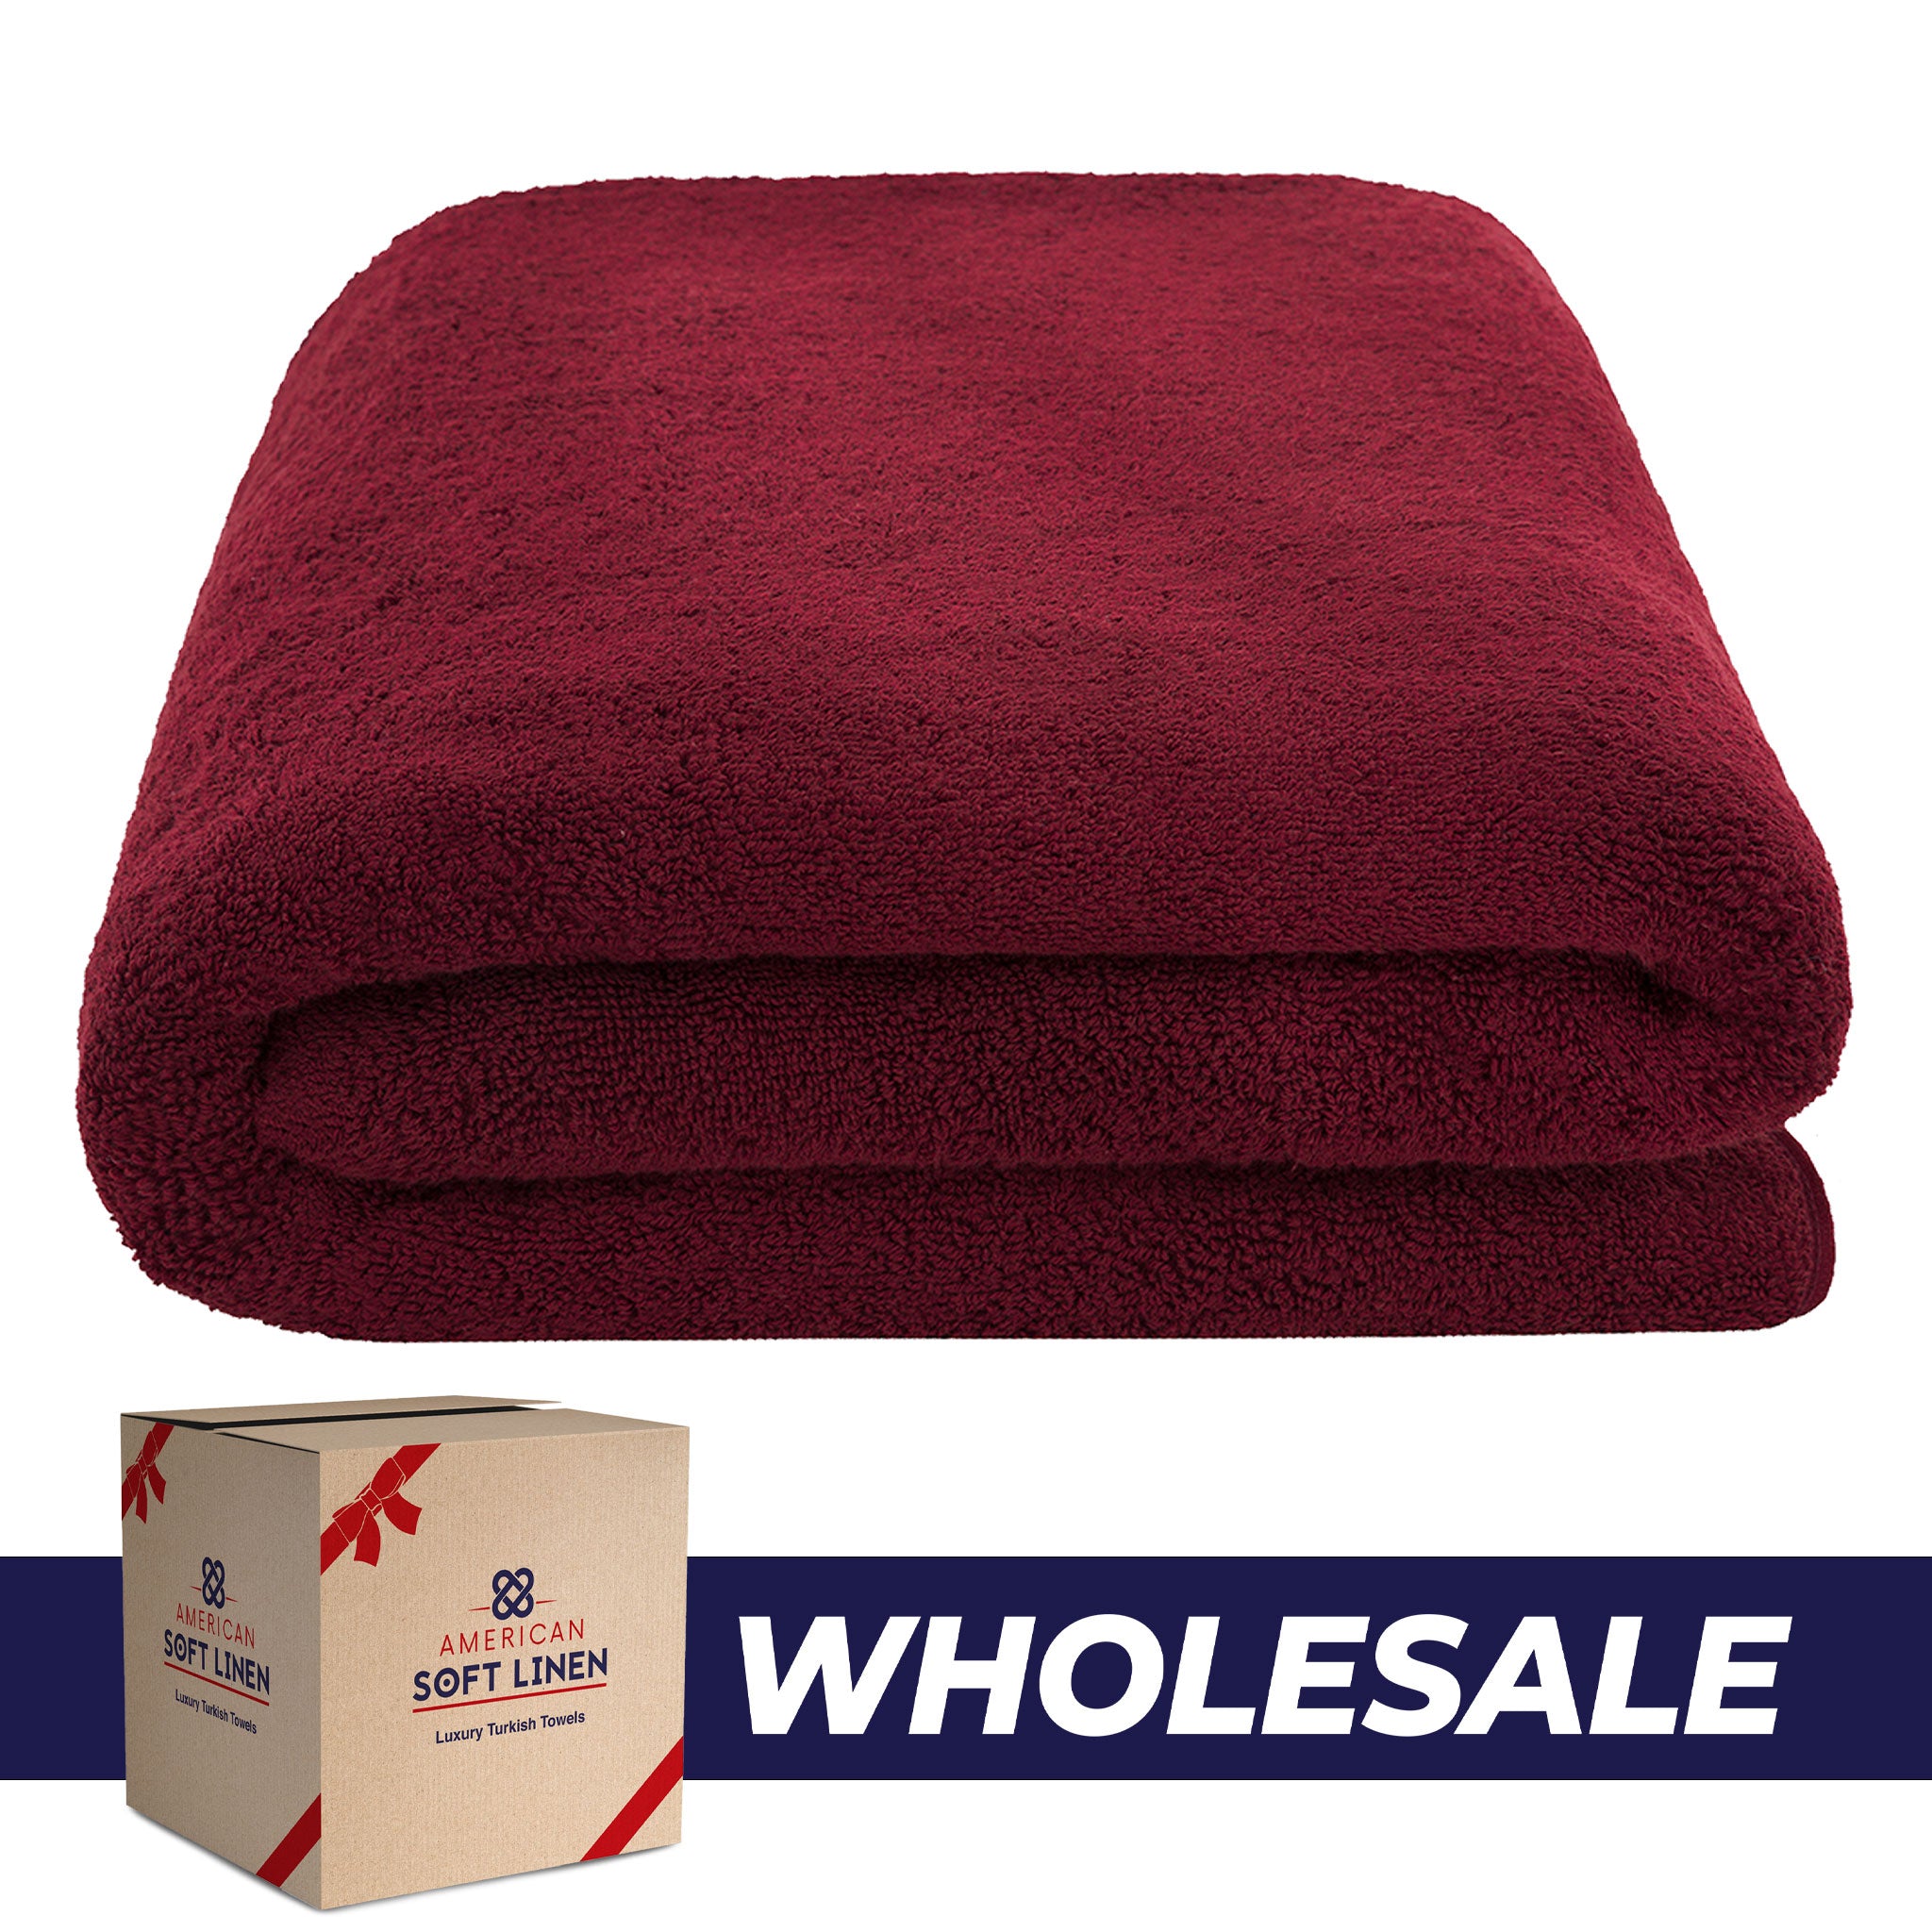 American Soft Linen - 40x80 Inch Oversized Bath Sheet Turkish Bath Towel - 12 Piece Case Pack - Bordeaux-Red - 0